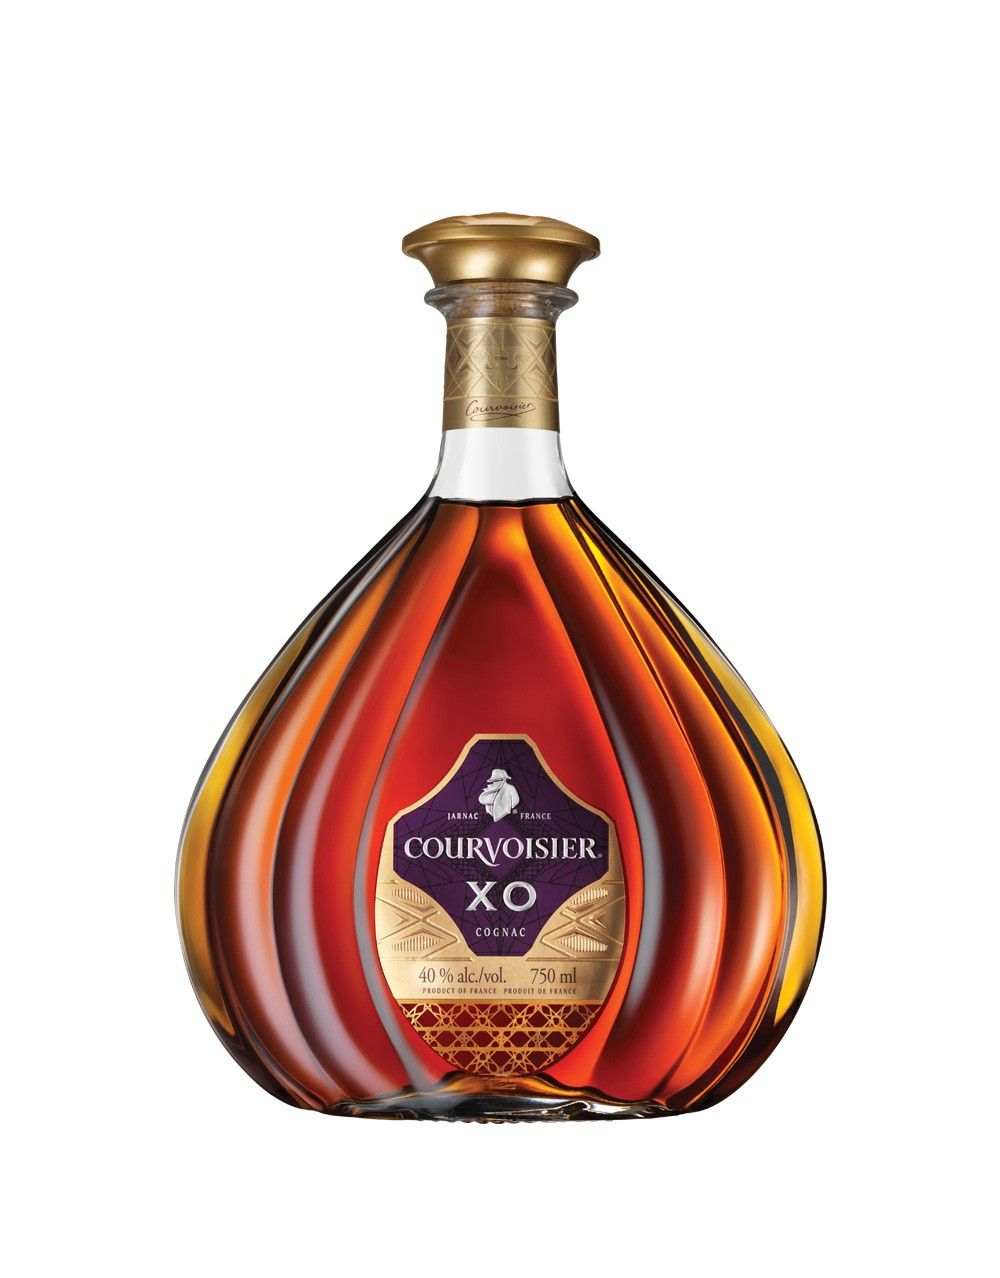 Courvoisier XO Cognac | Buy Online or Send as a Gift